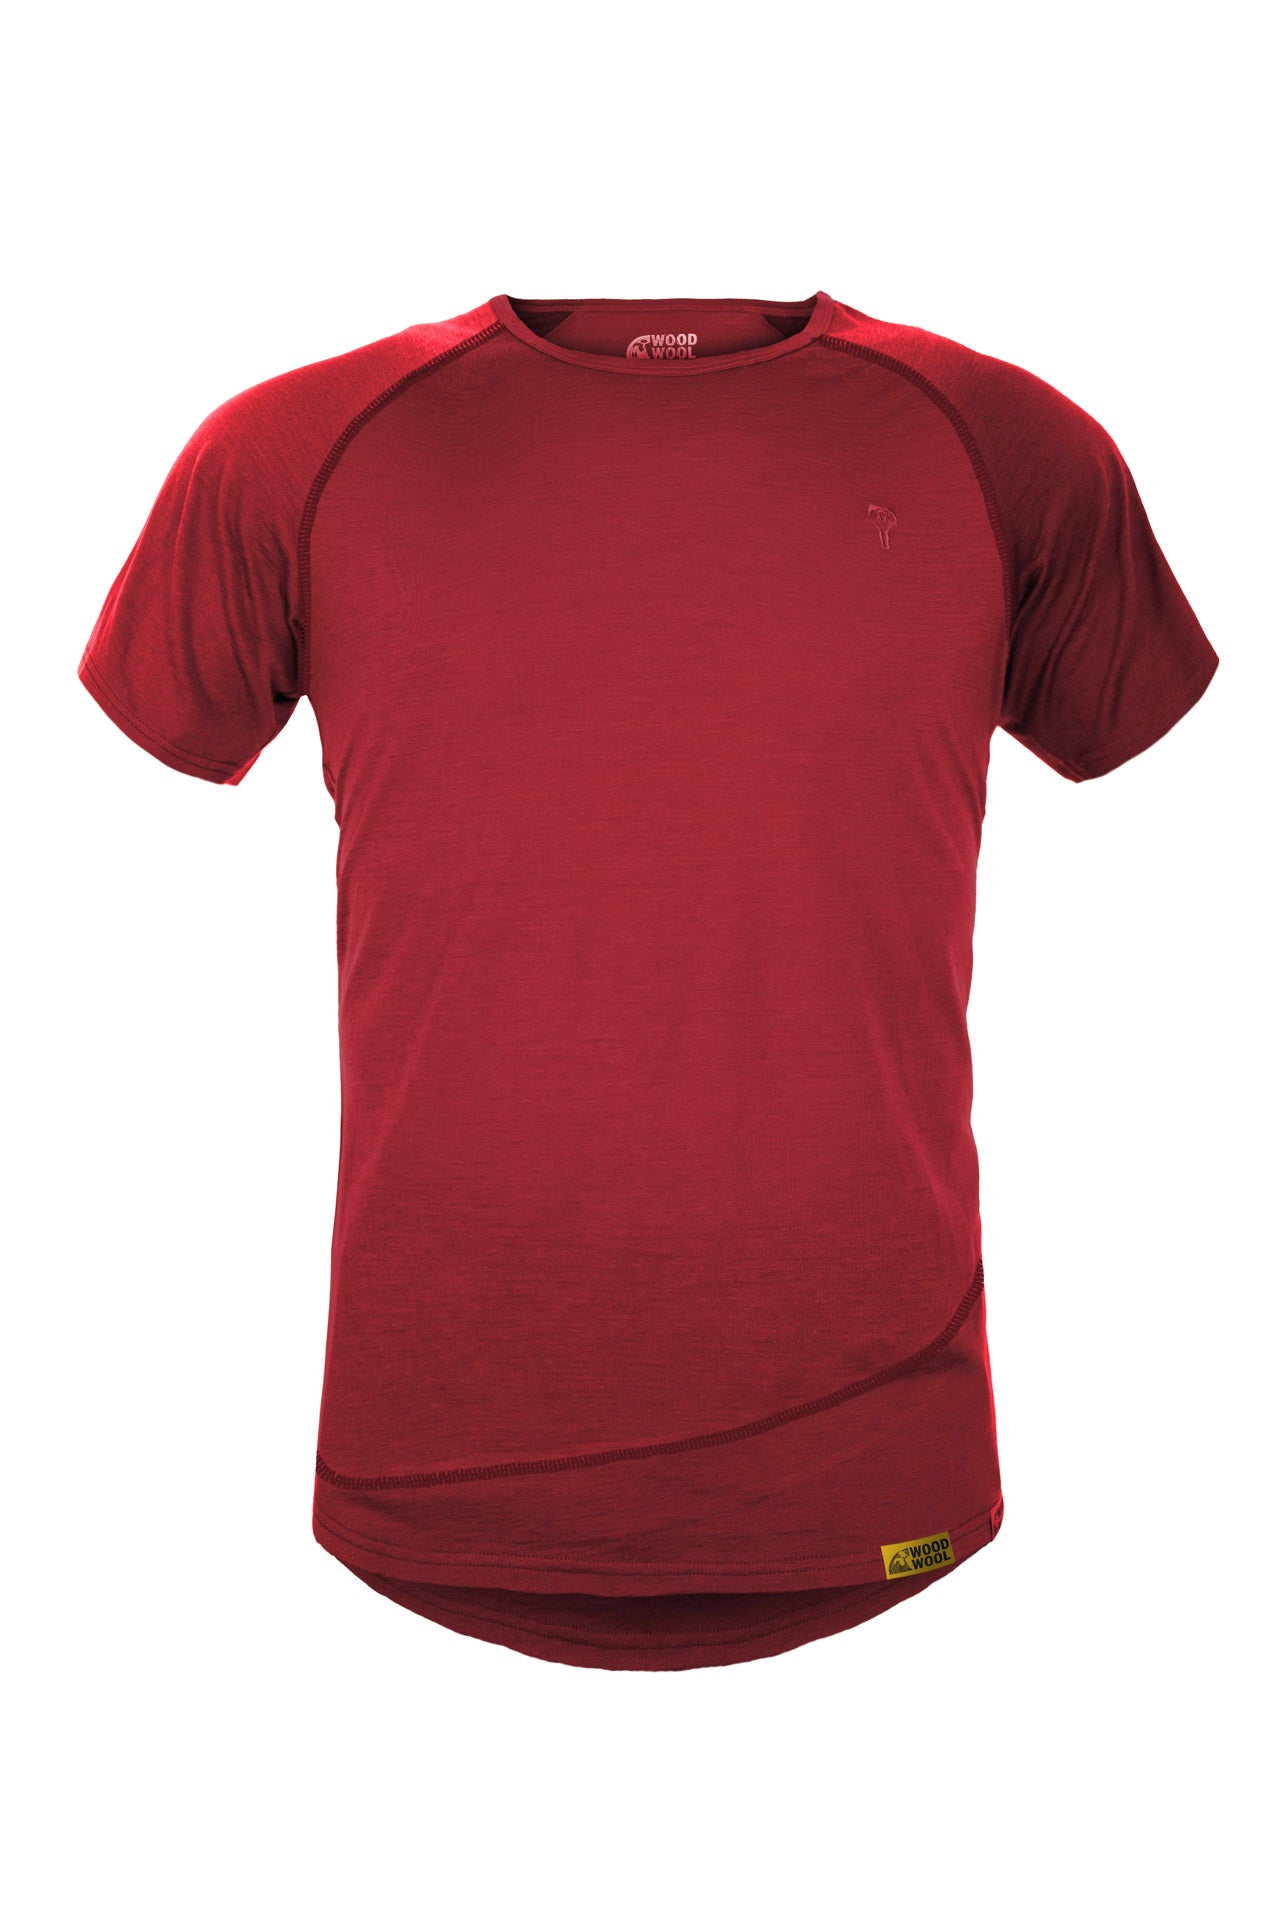 WoodWool T-Shirt Mr. Pike | Fired Red Brick